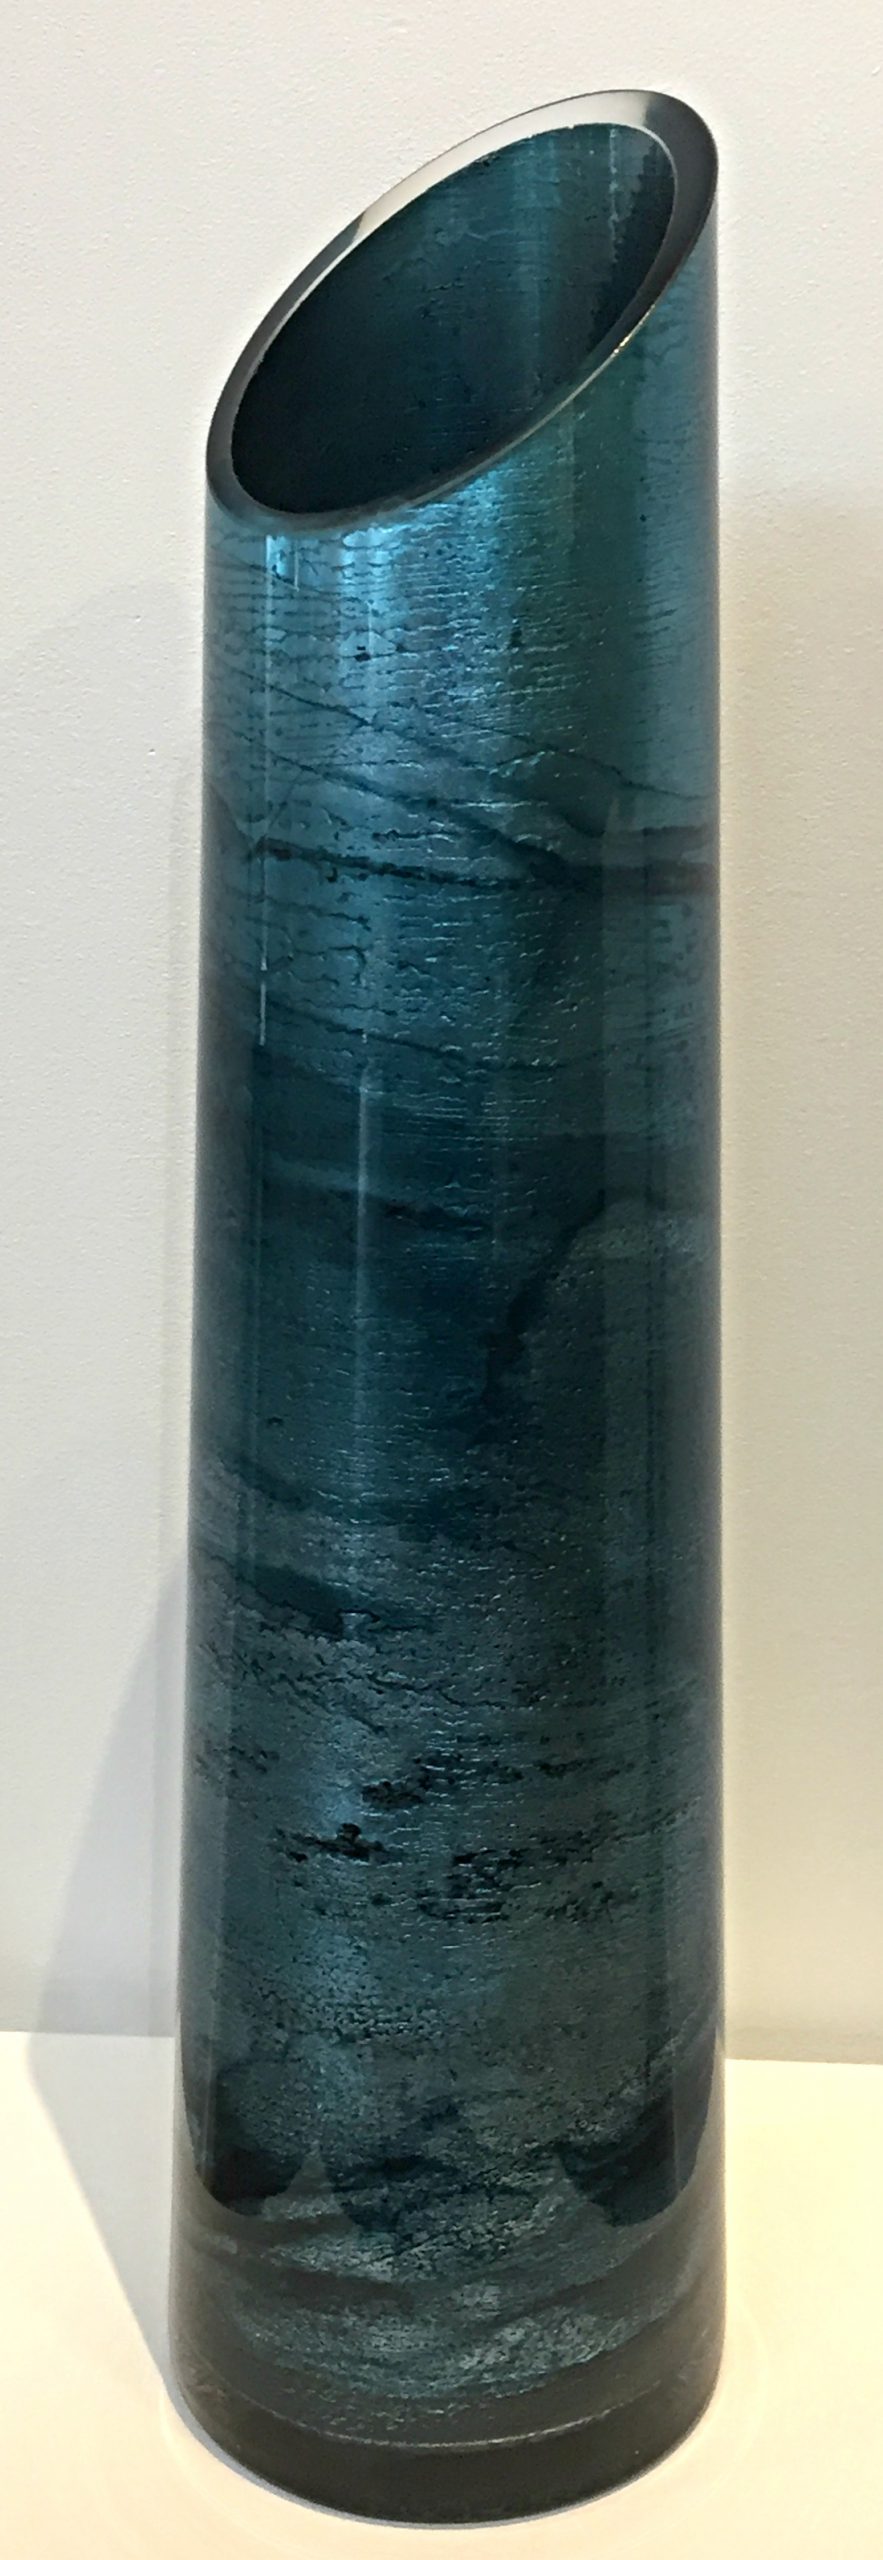 Teal hand-gilded medium slant vase by David Graff | Effusion Art Gallery + Cast Glass Studio, Invermere BC